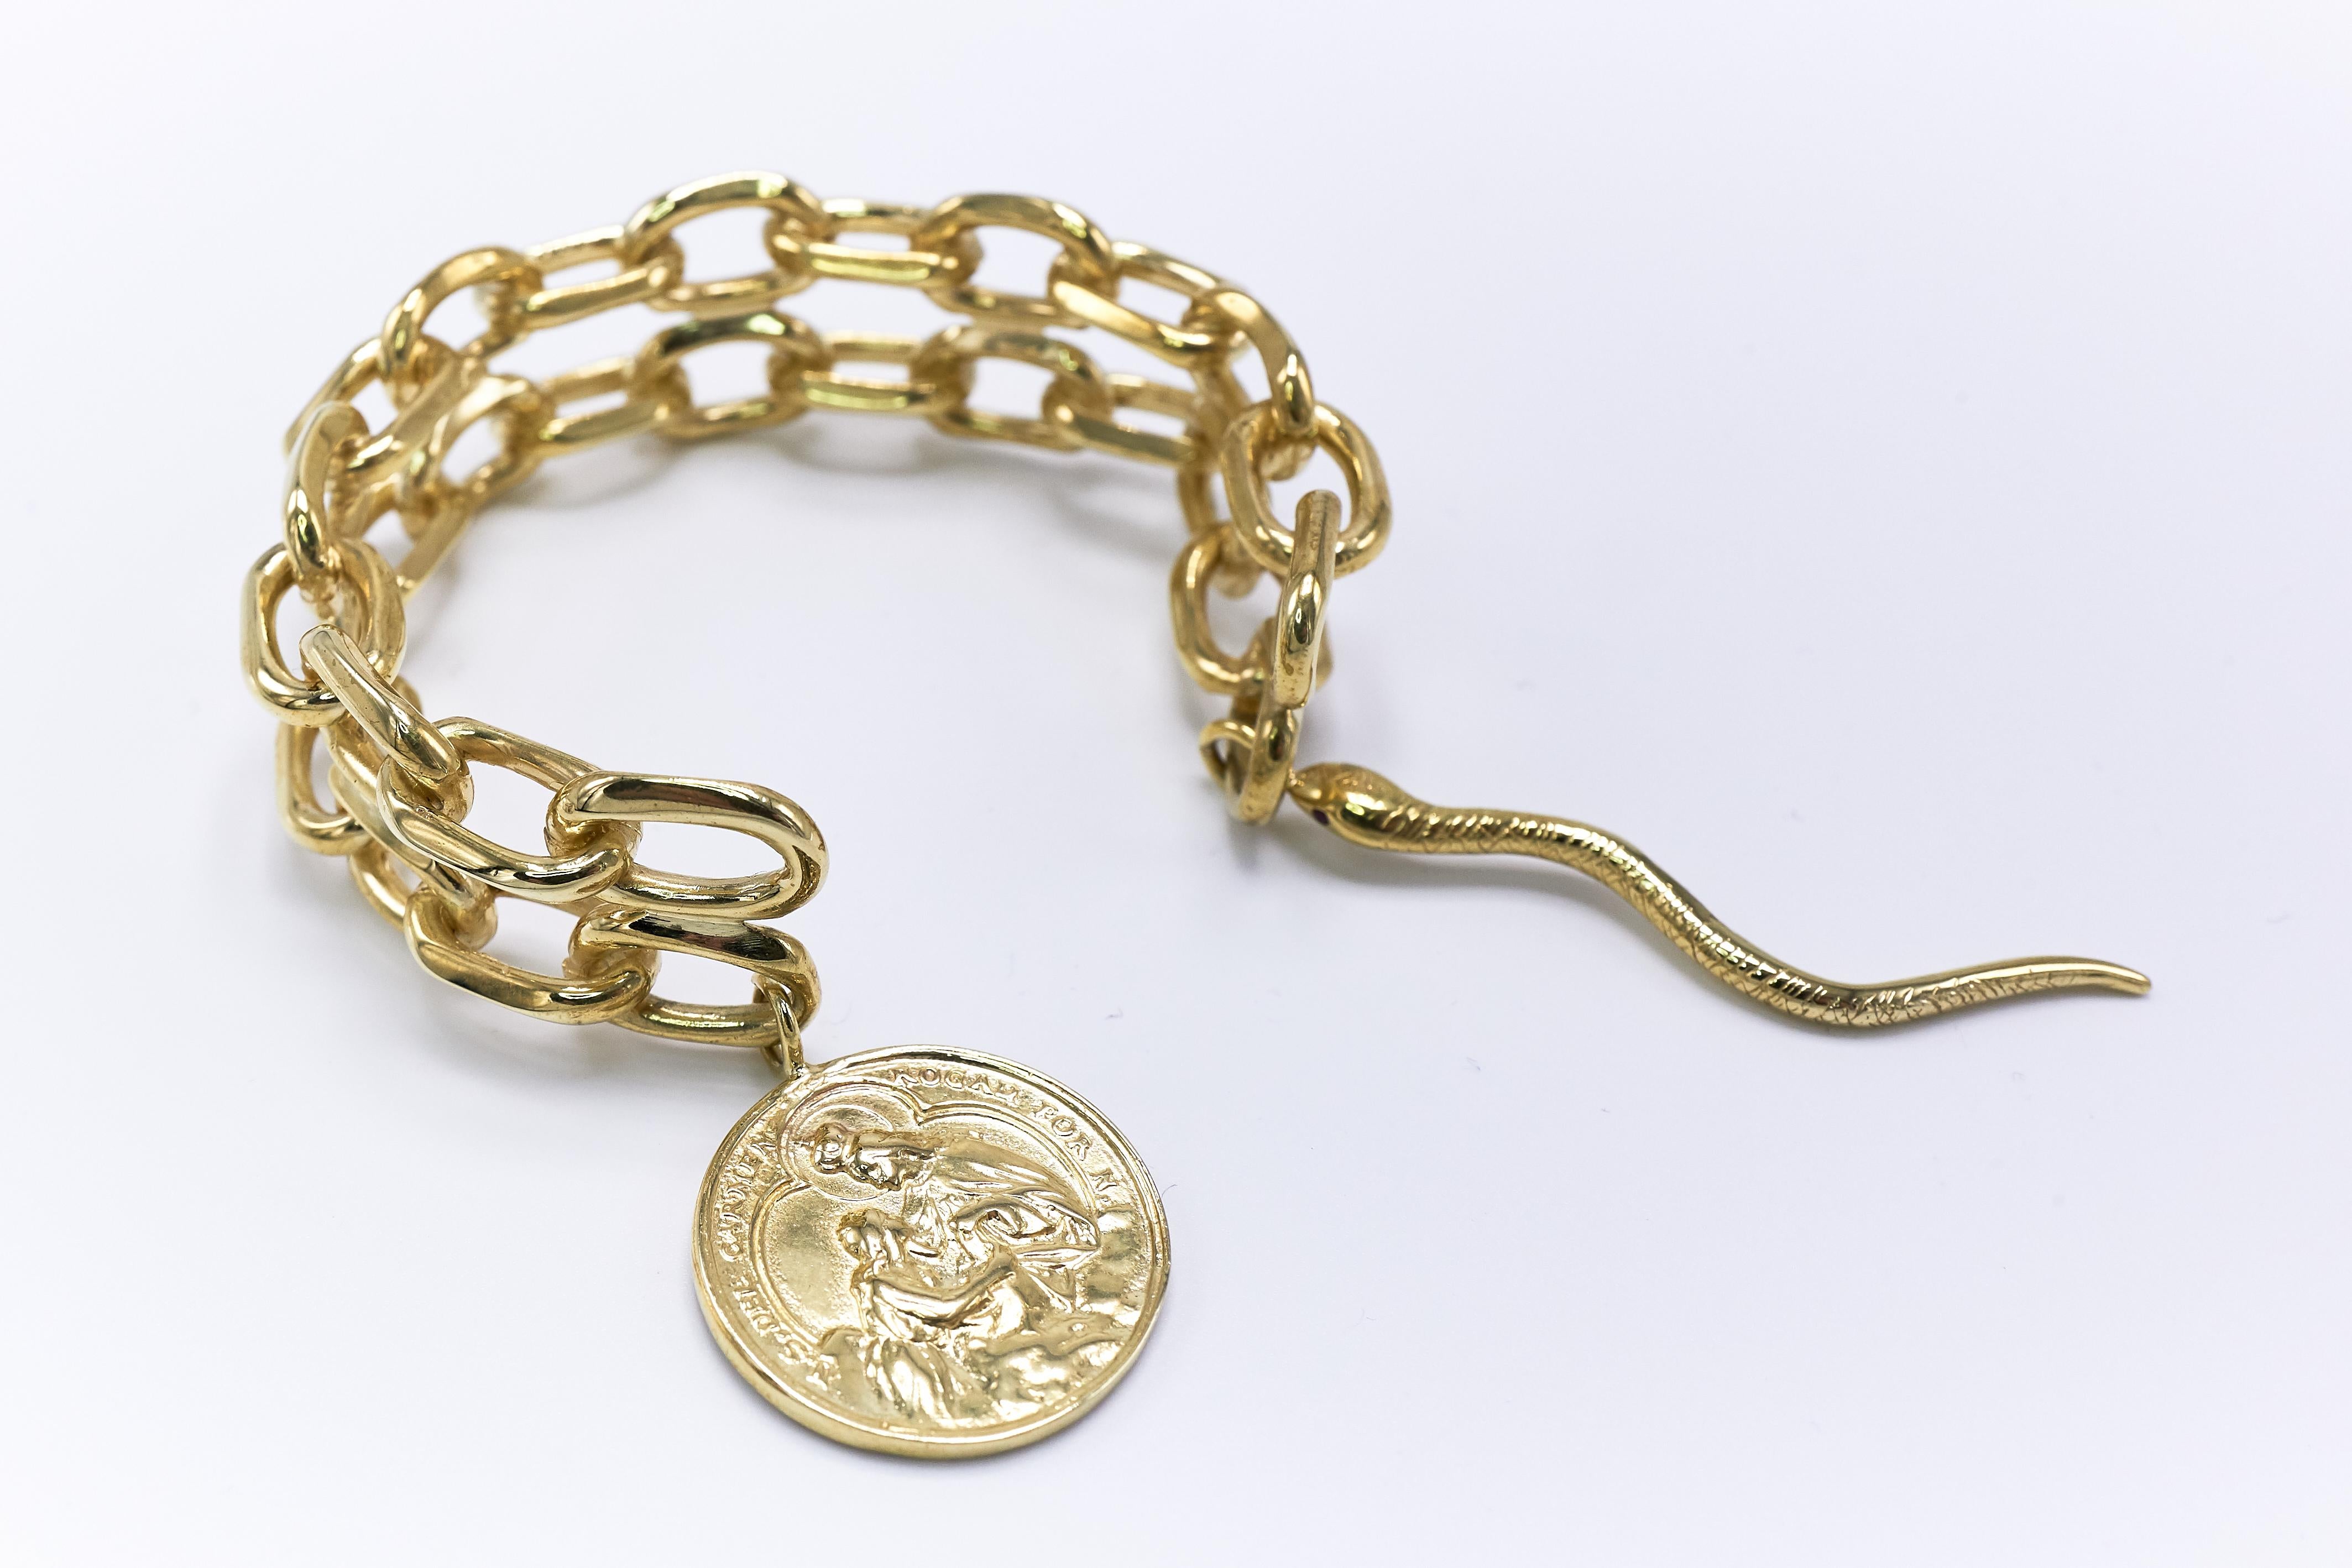 Ruby Statement Arm Cuff Chain Bracelet Virgin Mary Medal Snake J Dauphin

J DAUPHIN 